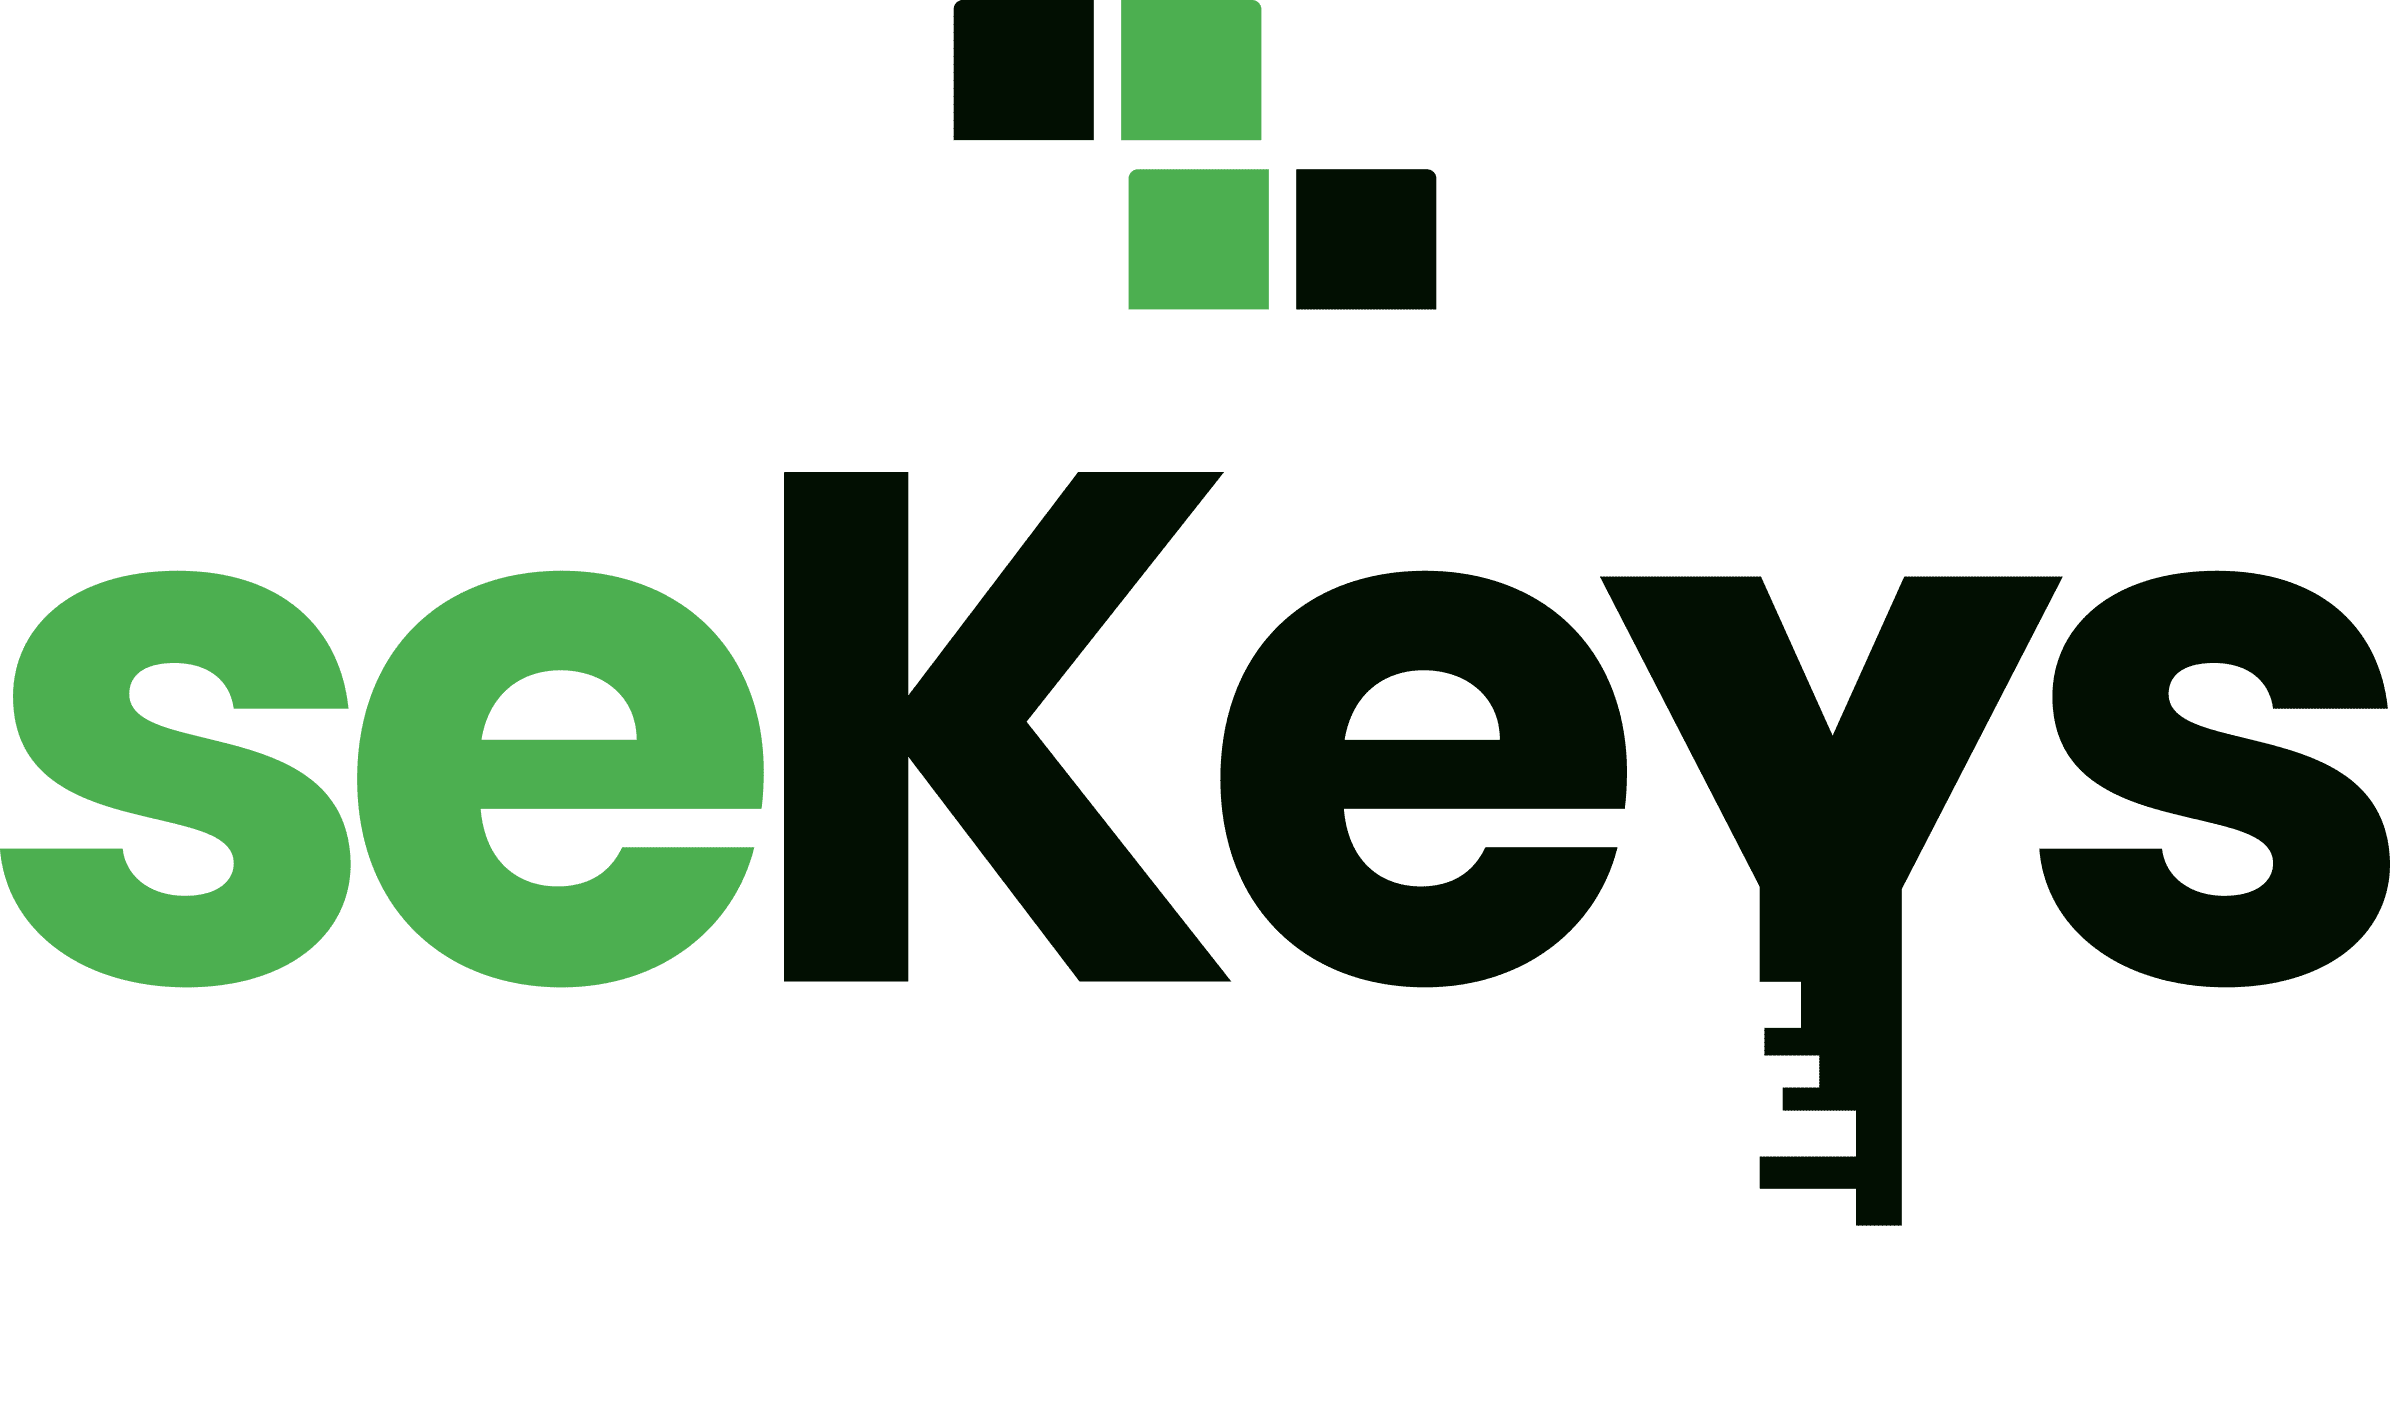 se-keys - סי קיז - sekeys - se keys